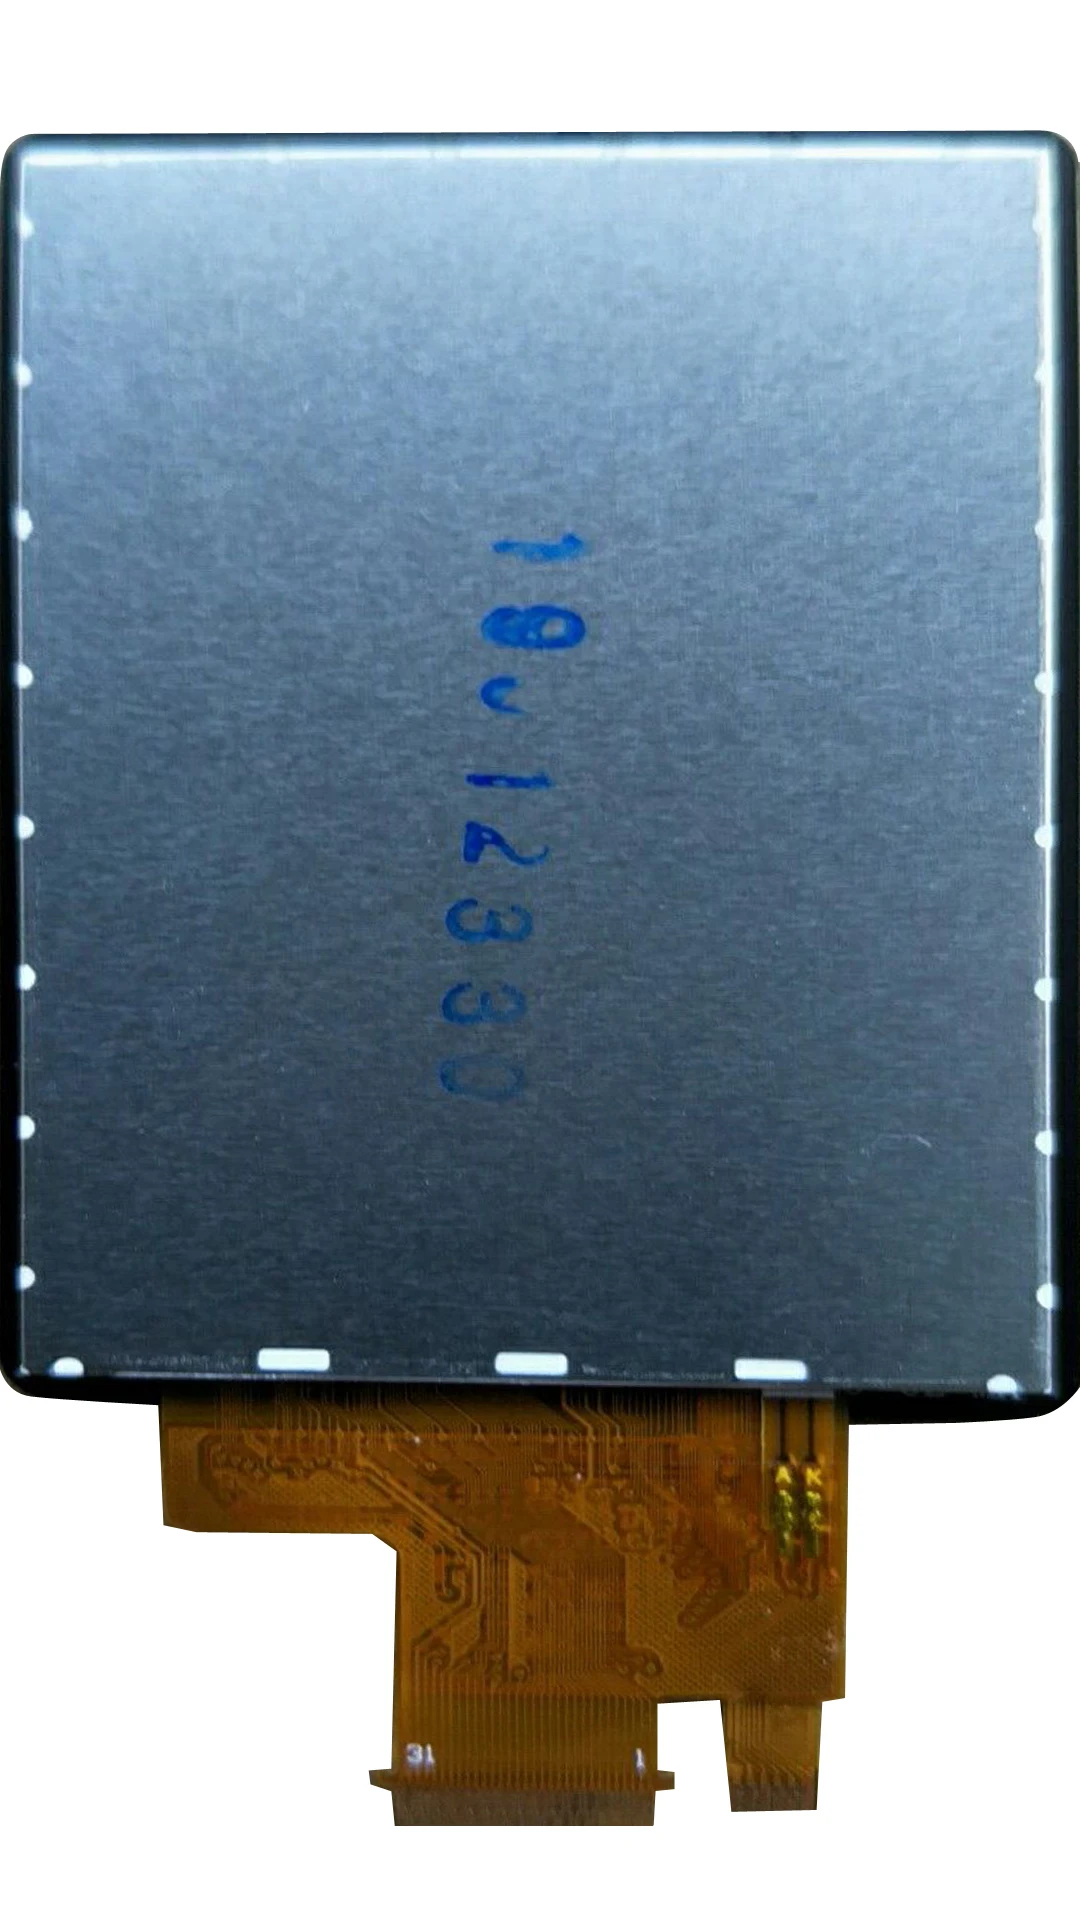 SJCAM SJ8 Pro ЖК-экран модуль сенсорный экран SJCAM аксессуары для SJCAM SJ8 Pro 4K Экшн-камера